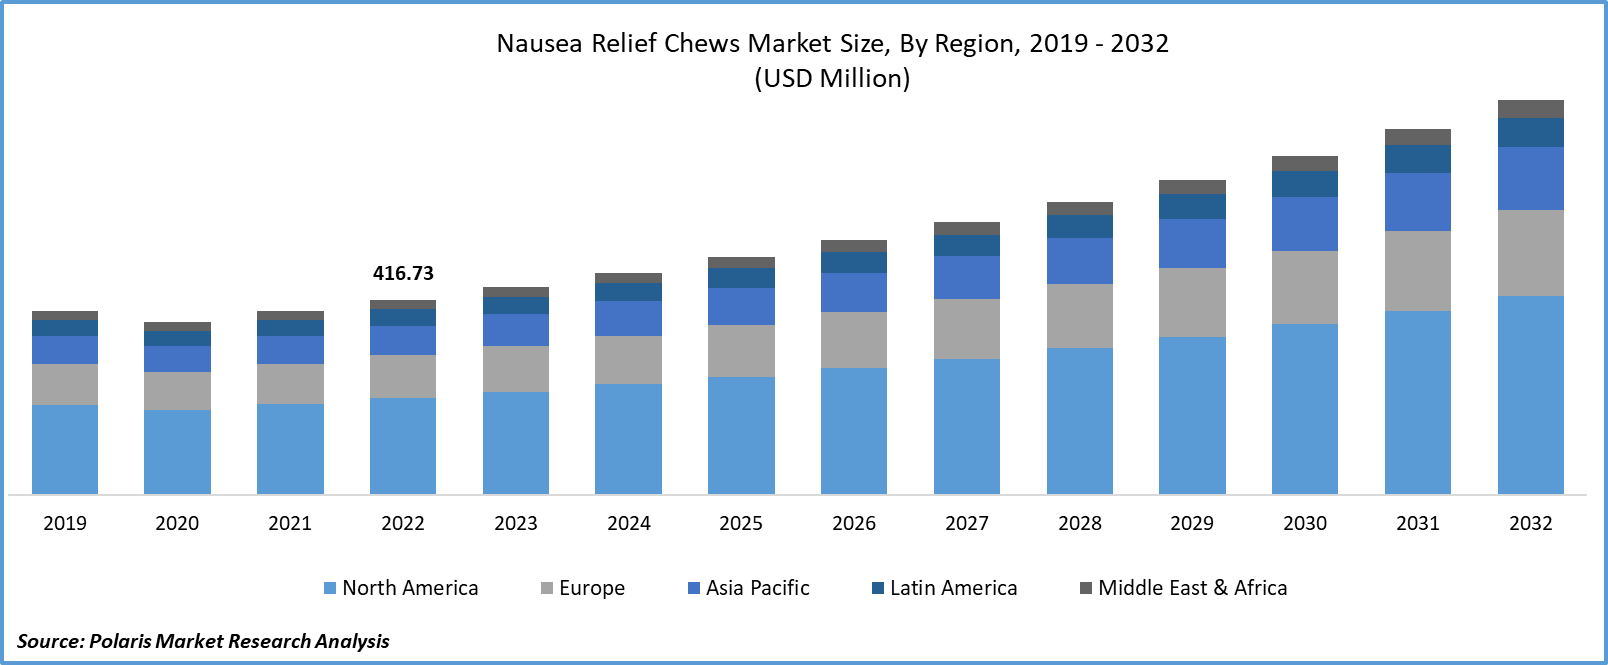 Nausea Relief Chews Market Size